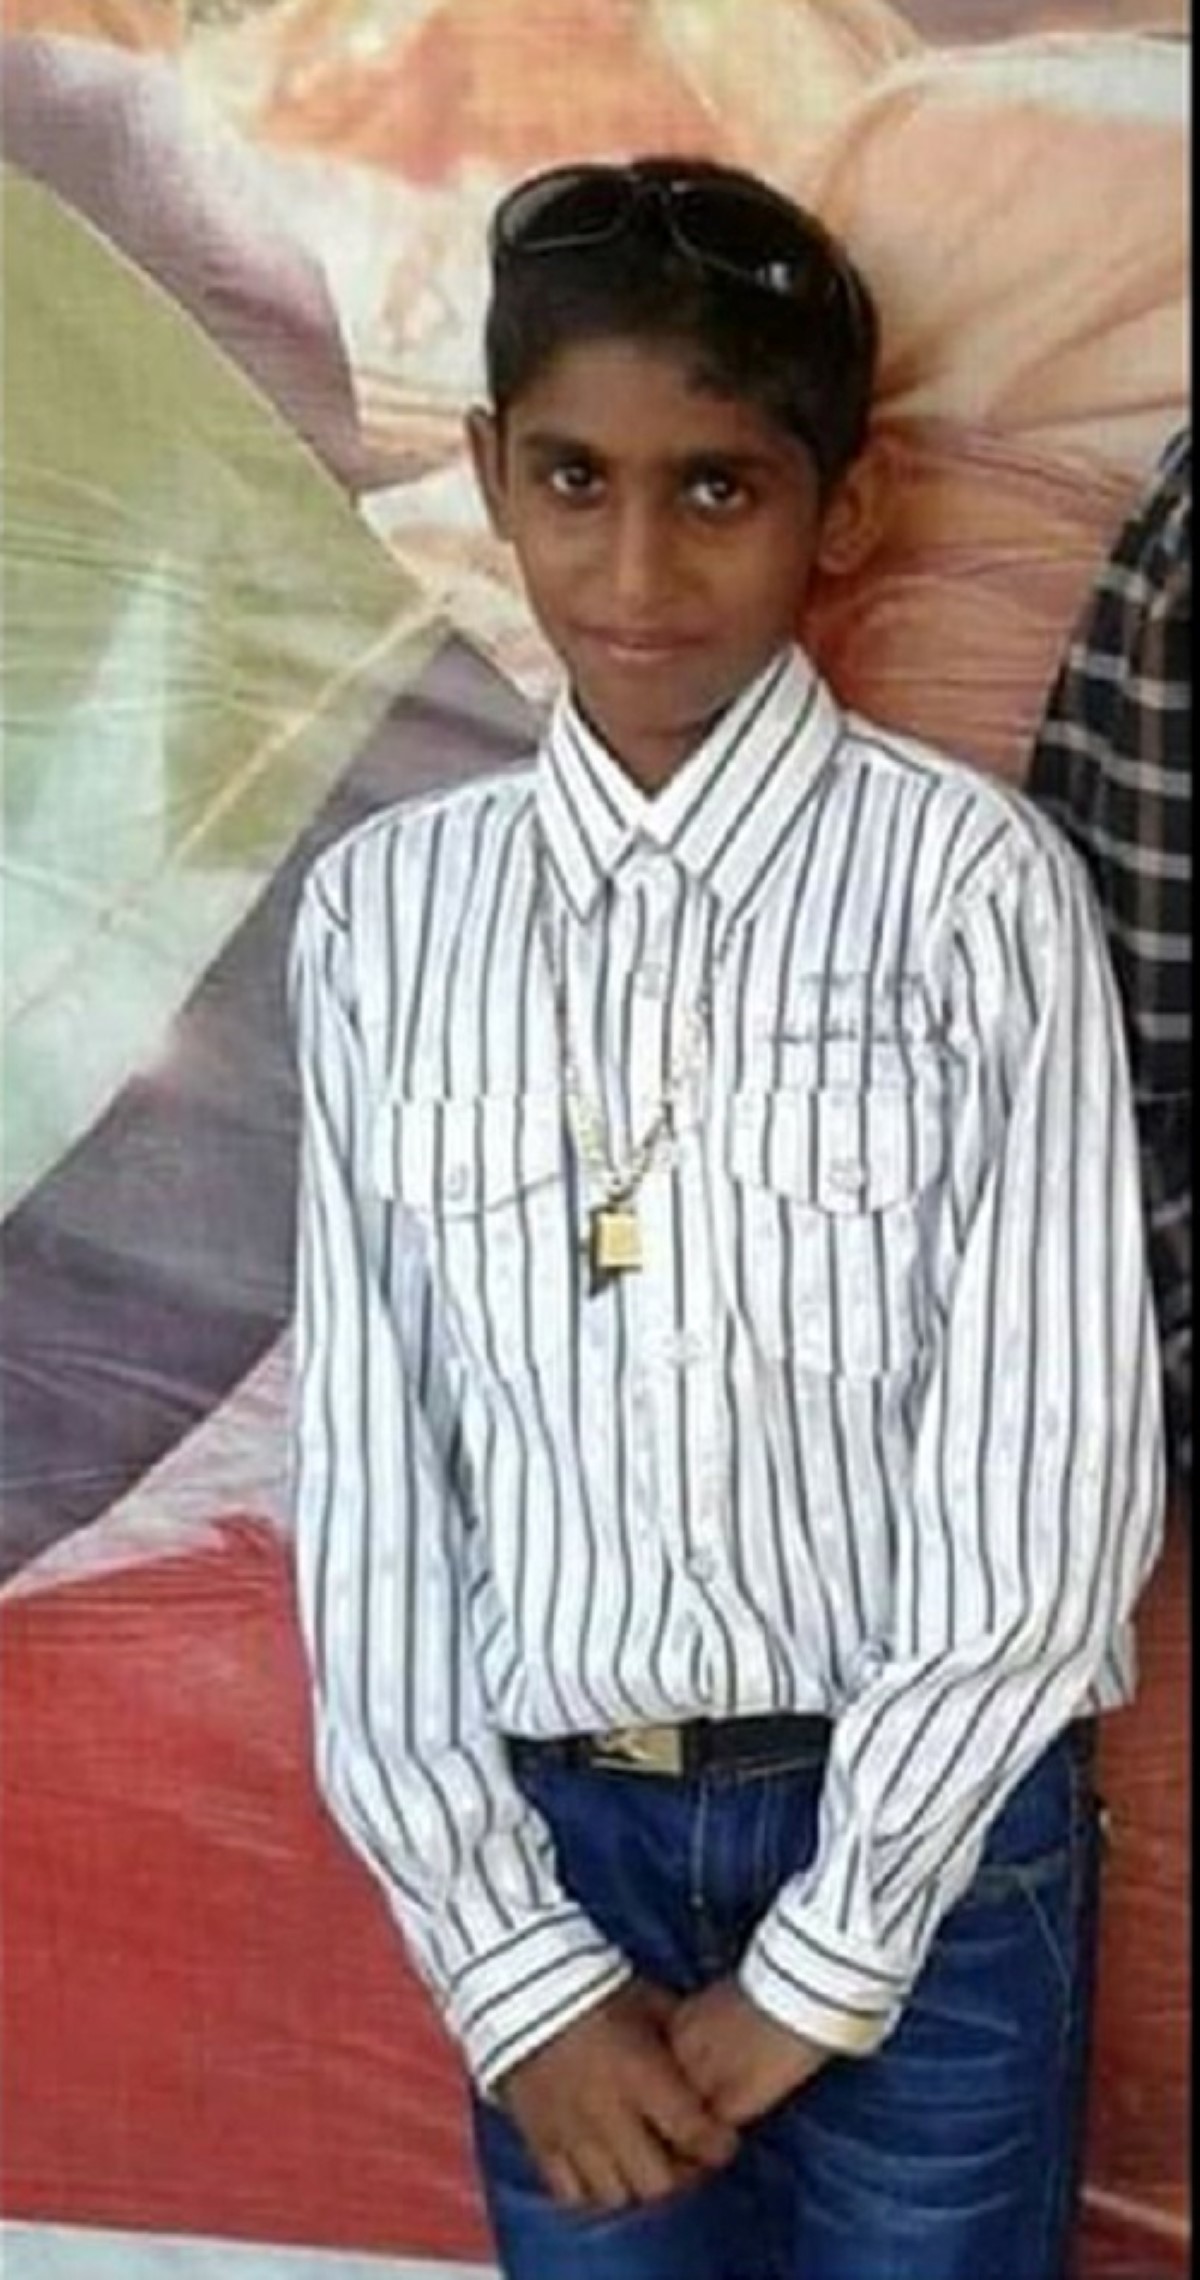 Disparition inquiétante de Mohammad Shahan Soobhan, âgé de 10 ans